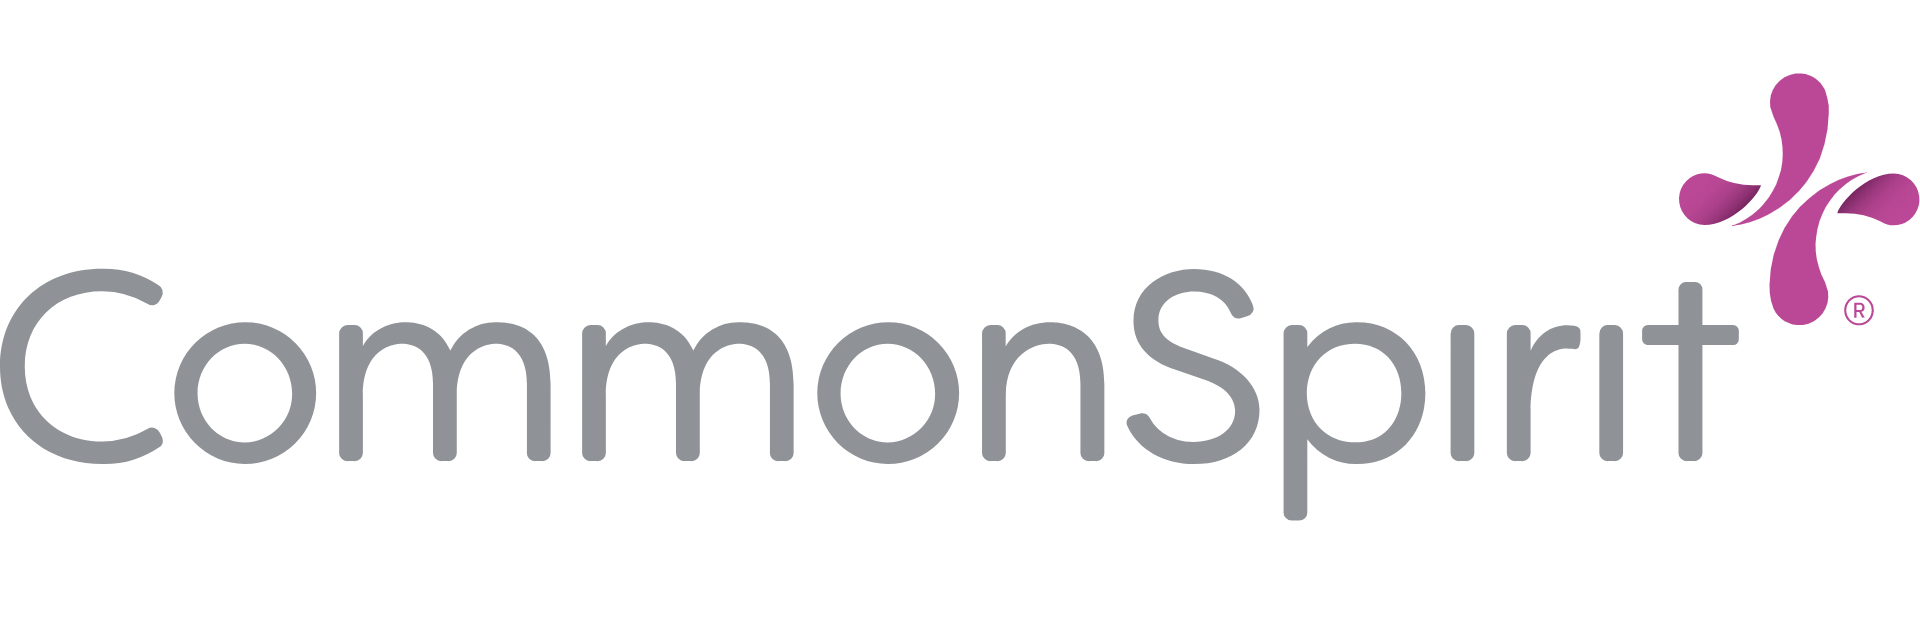 Common spirit logo